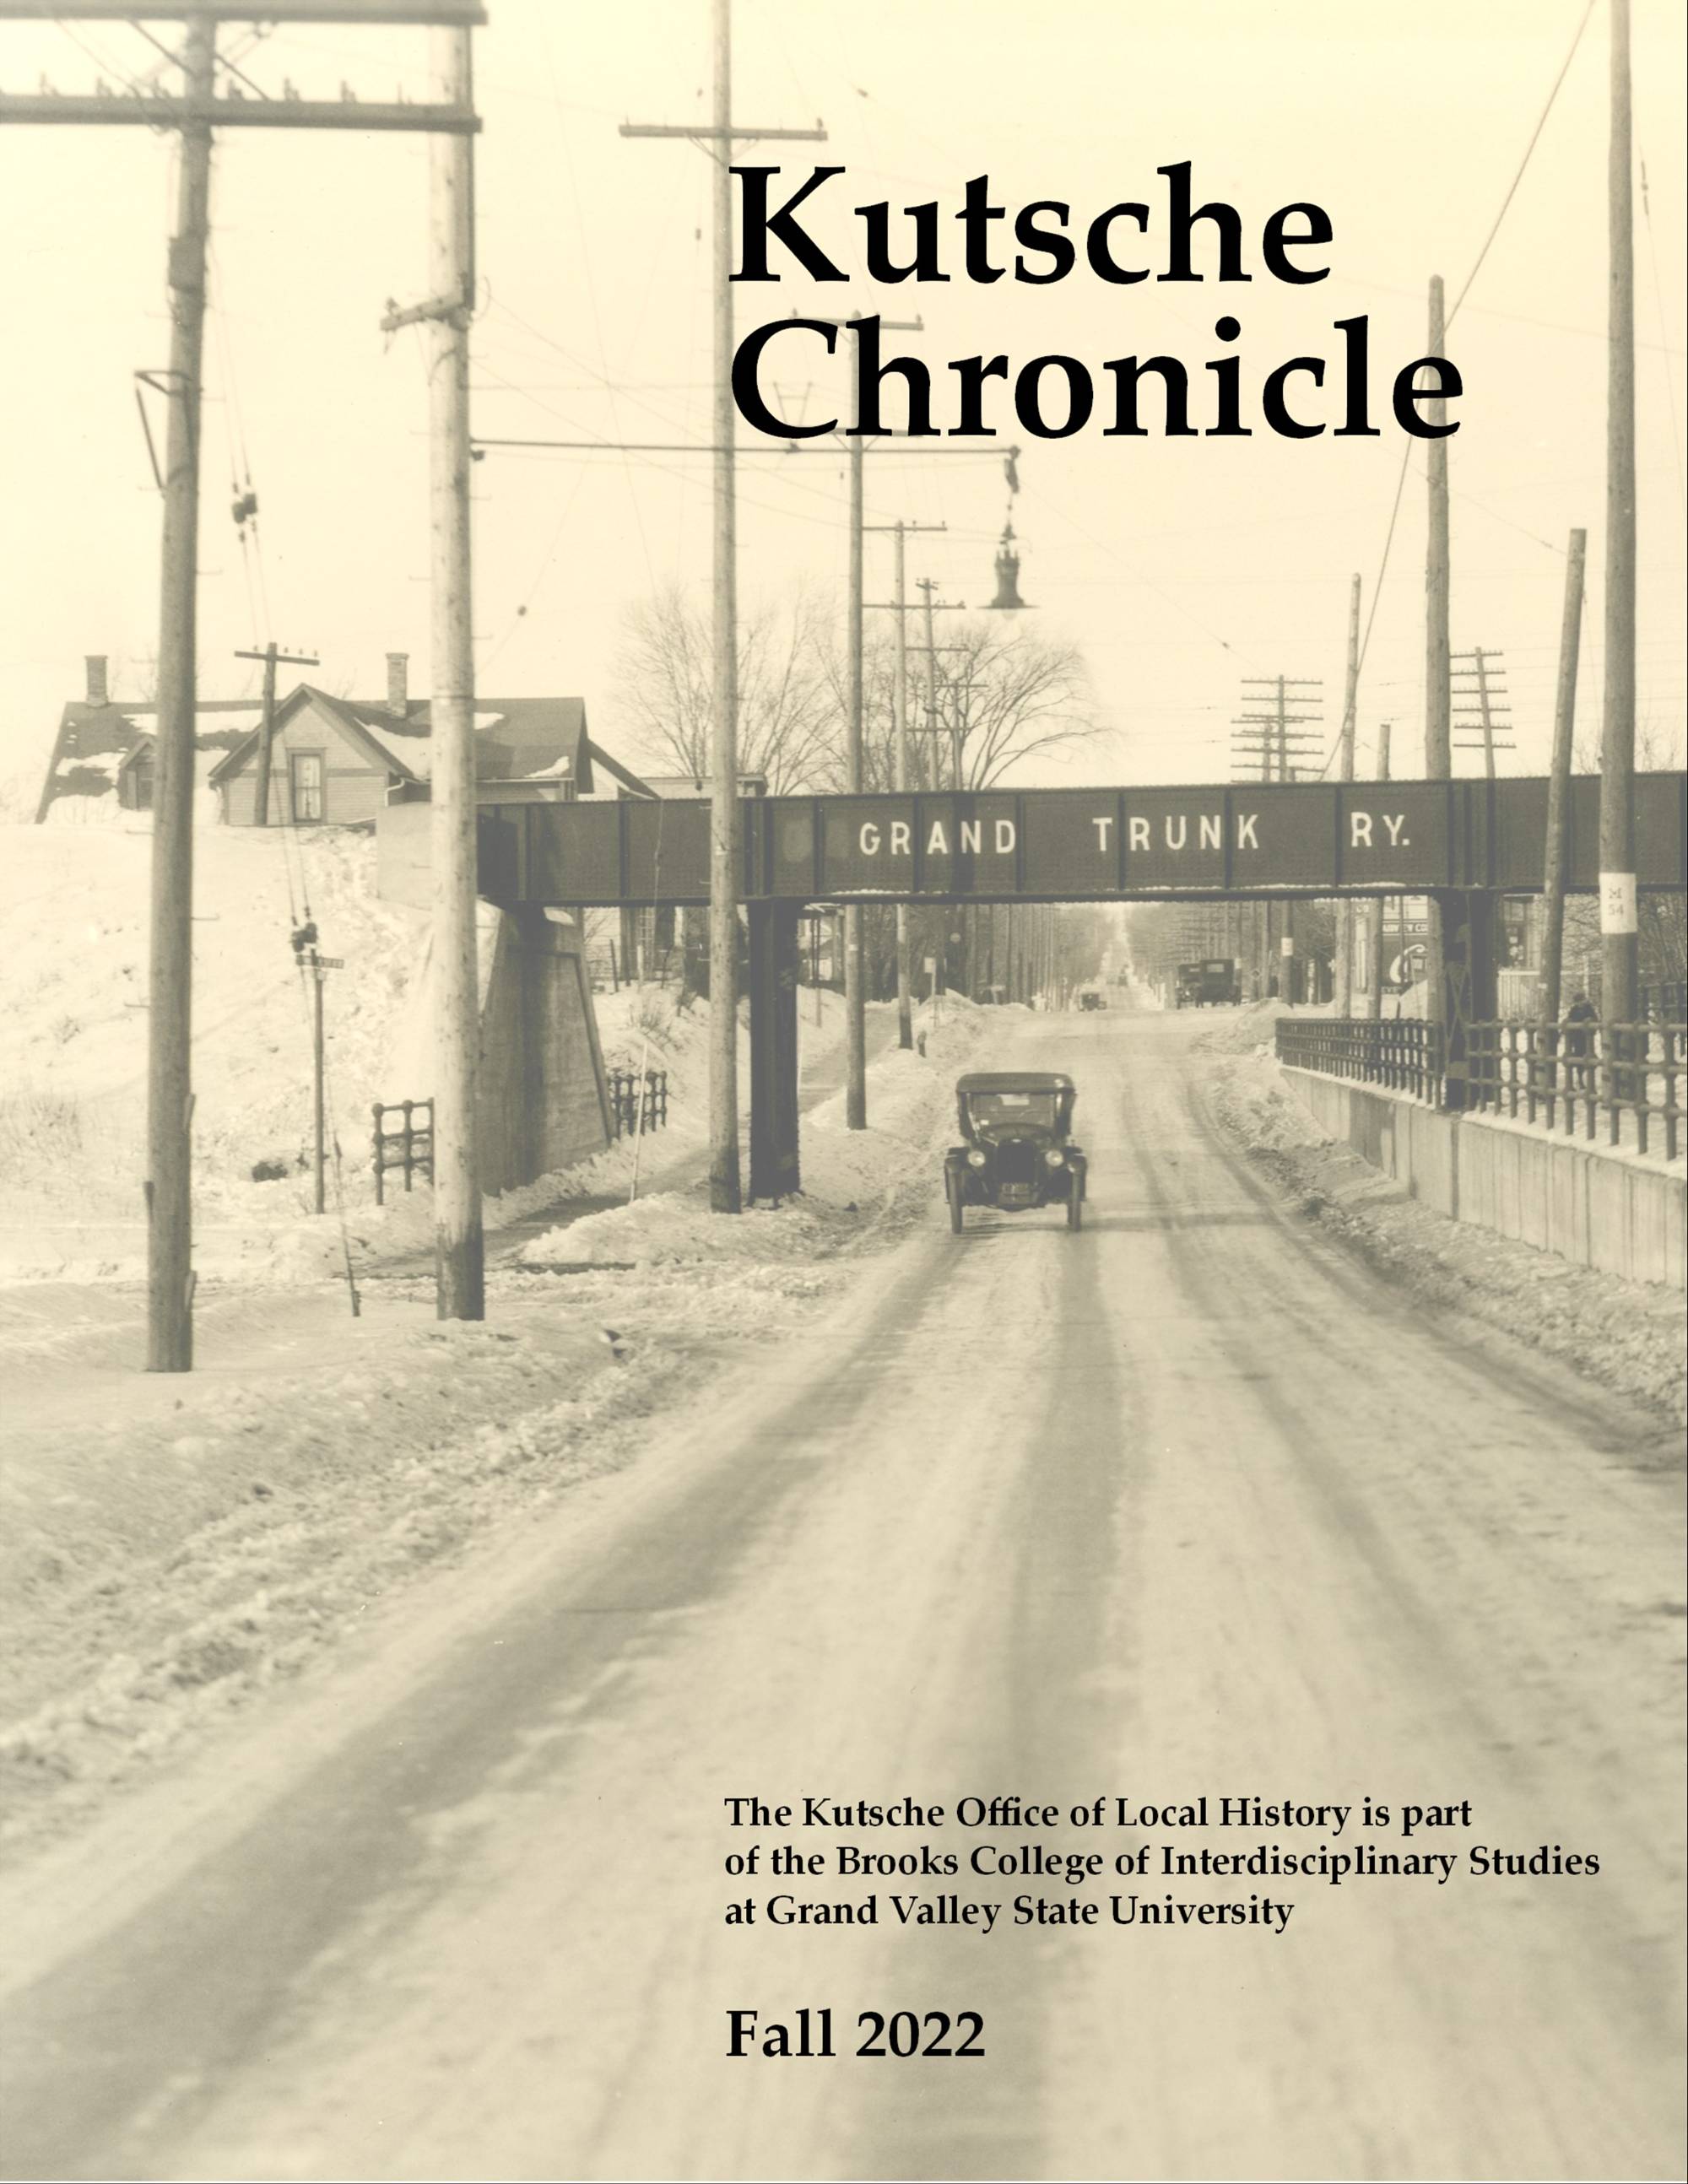 Fall 2022 Kutsche Chronicle cover